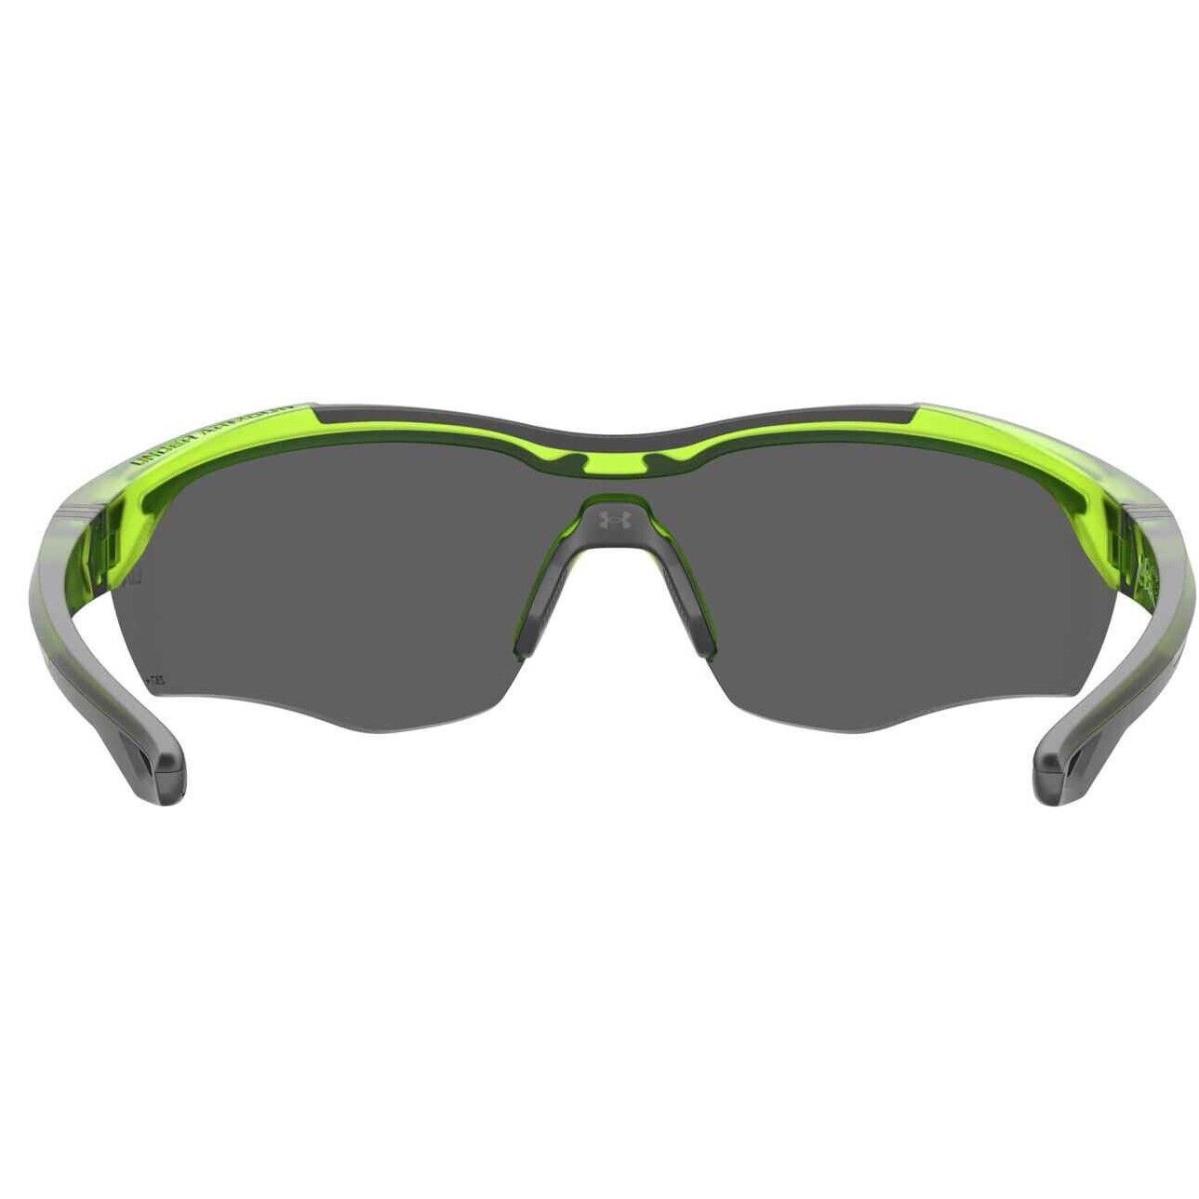 Under Armour eyeglasses  - Green Frame 0